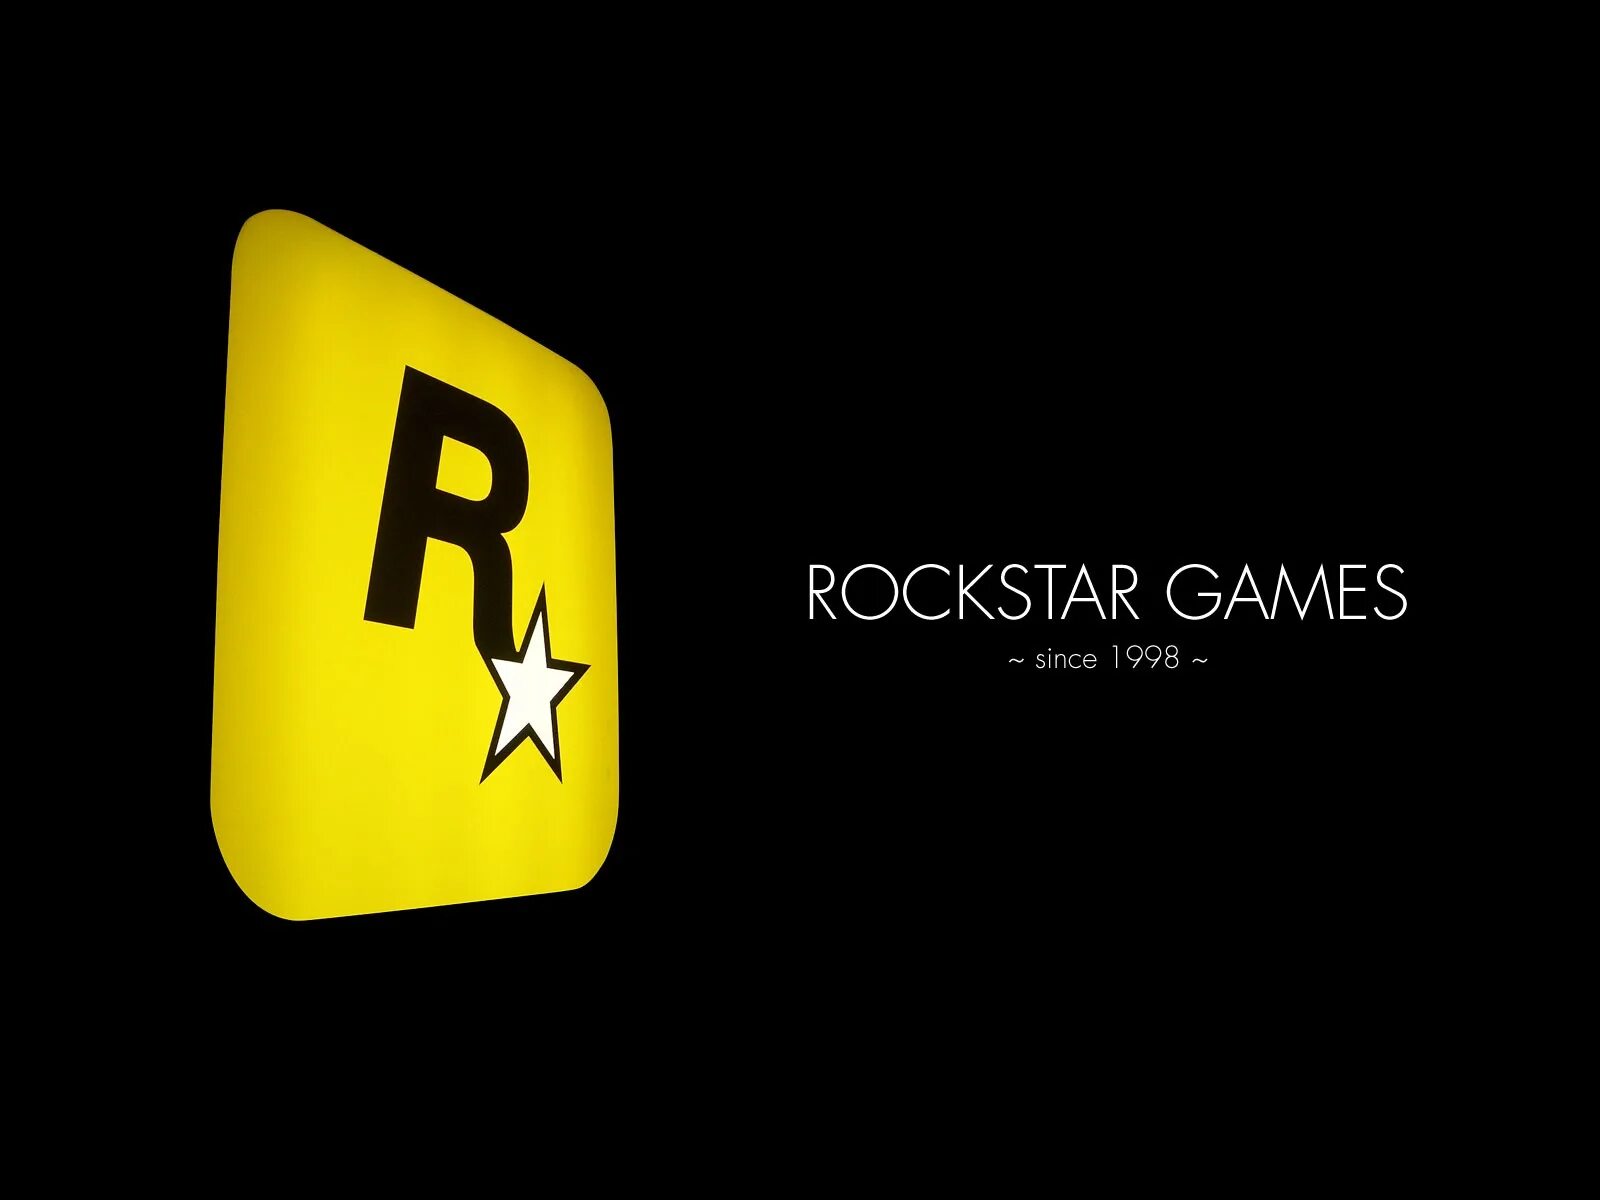 Rockstar games помощь. Rockstar games. Логотип рокстар. Rooster game. Игры Rockstar.